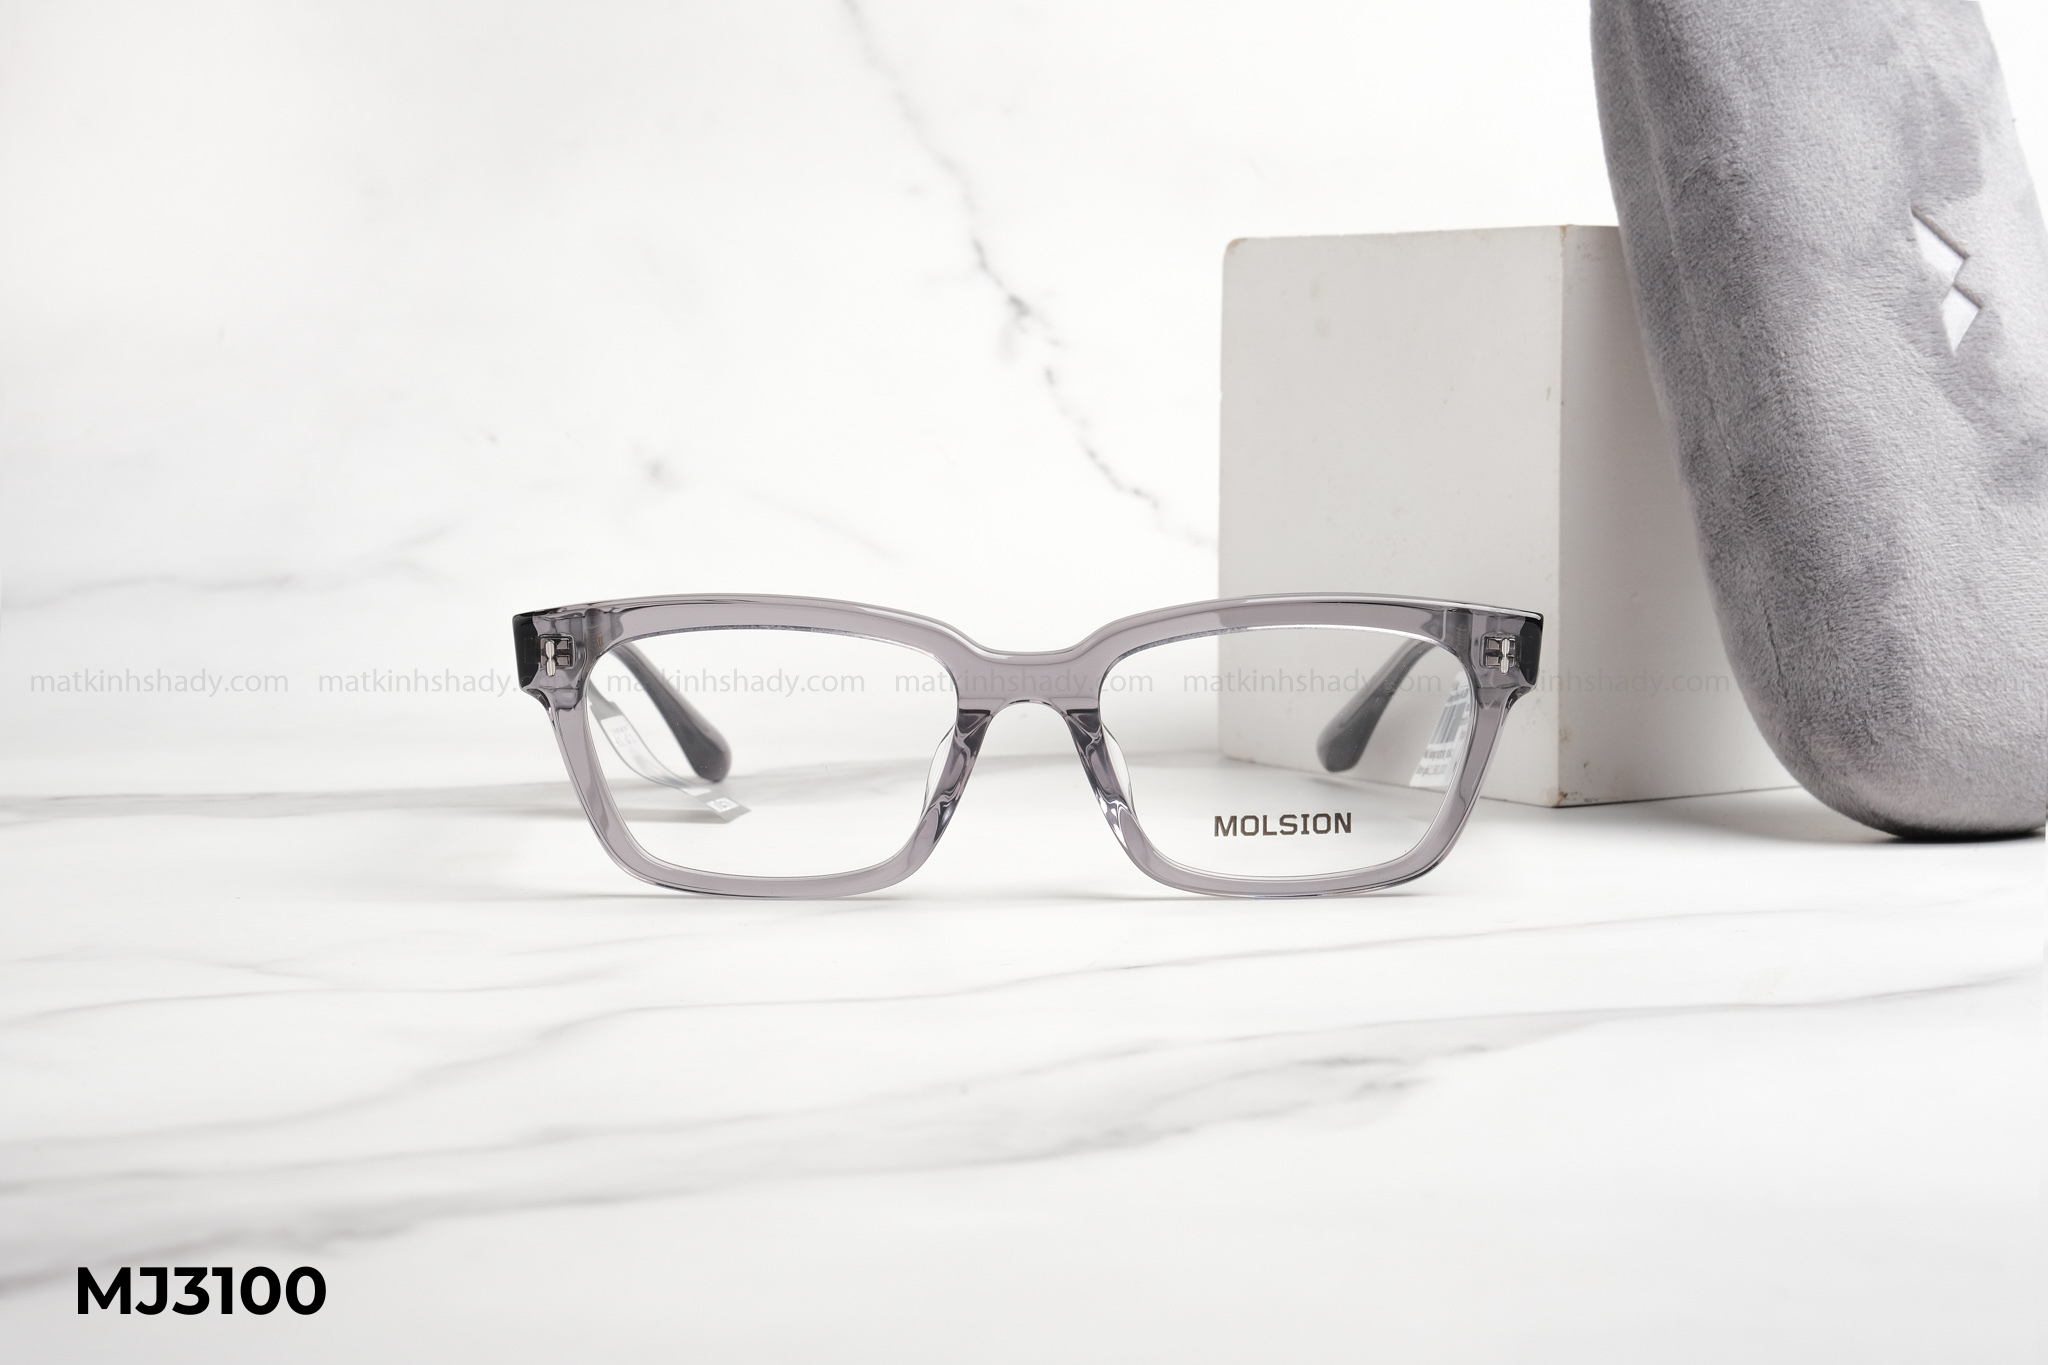  Molsion Eyewear - Glasses - MJ3100 